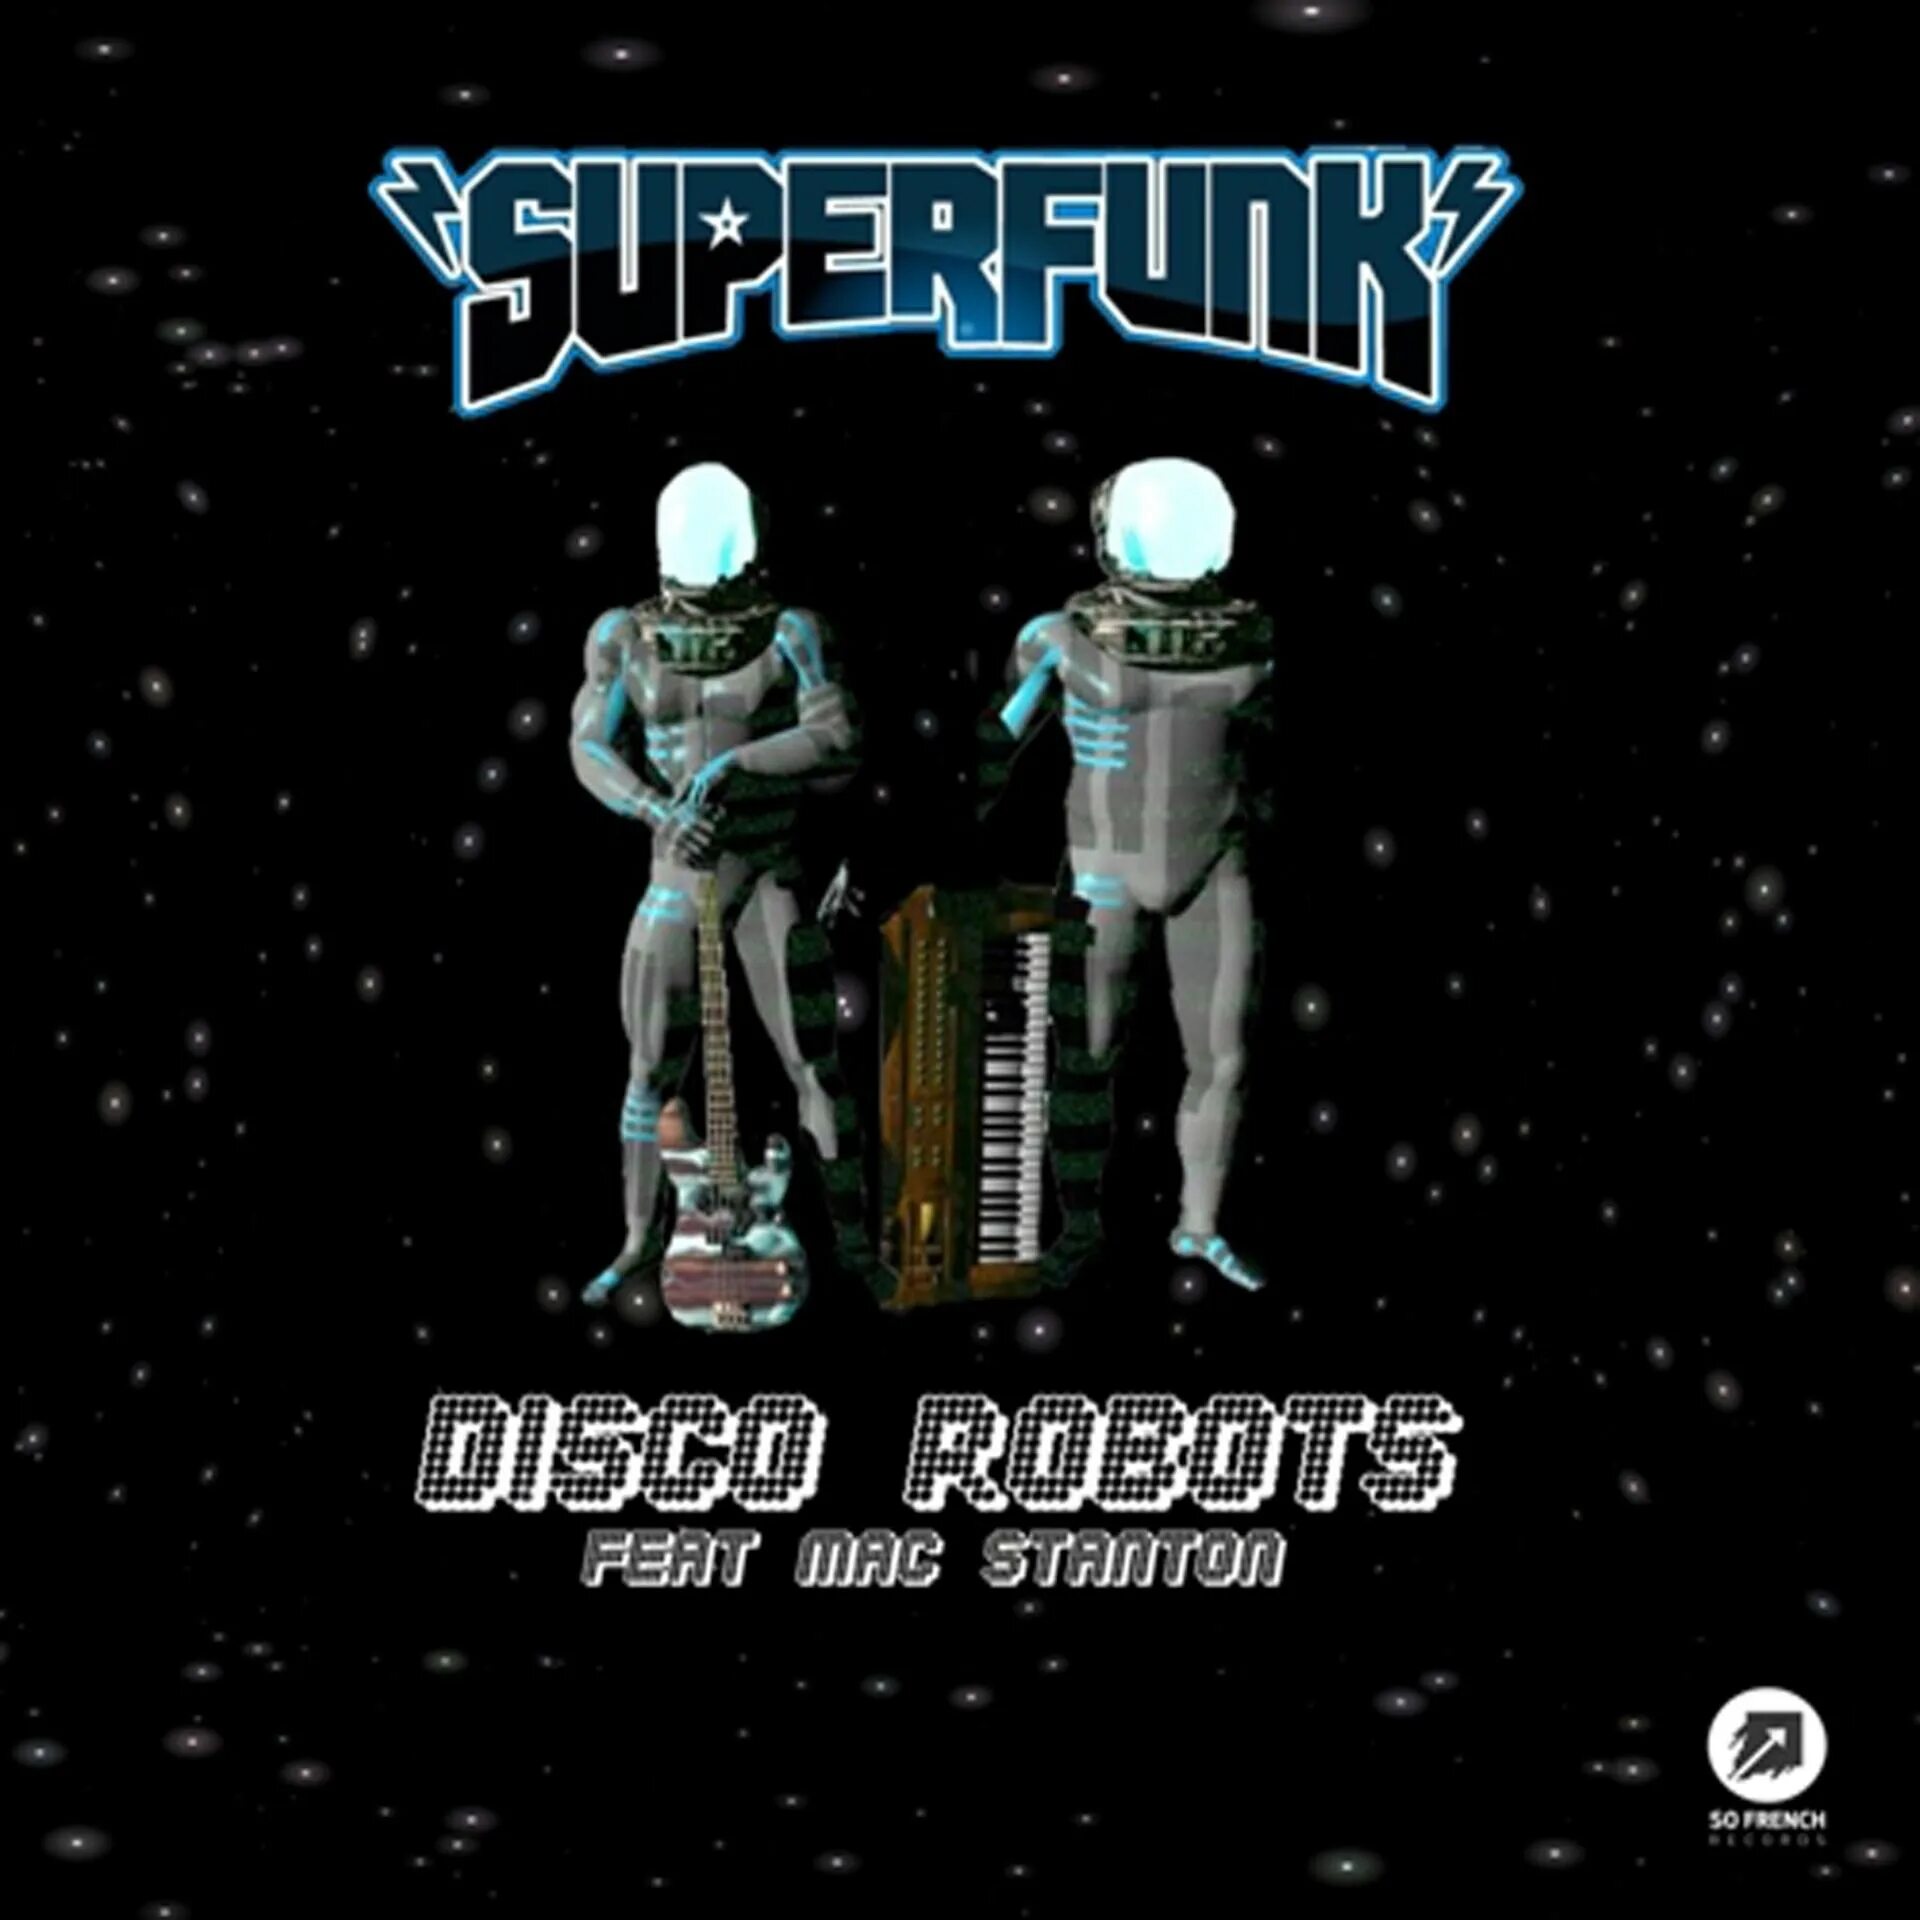 Robots mp3. Disco Robot. Робот из 70 диско. Диско робот картинки. V/A "Superfunk 3 (2lp)".